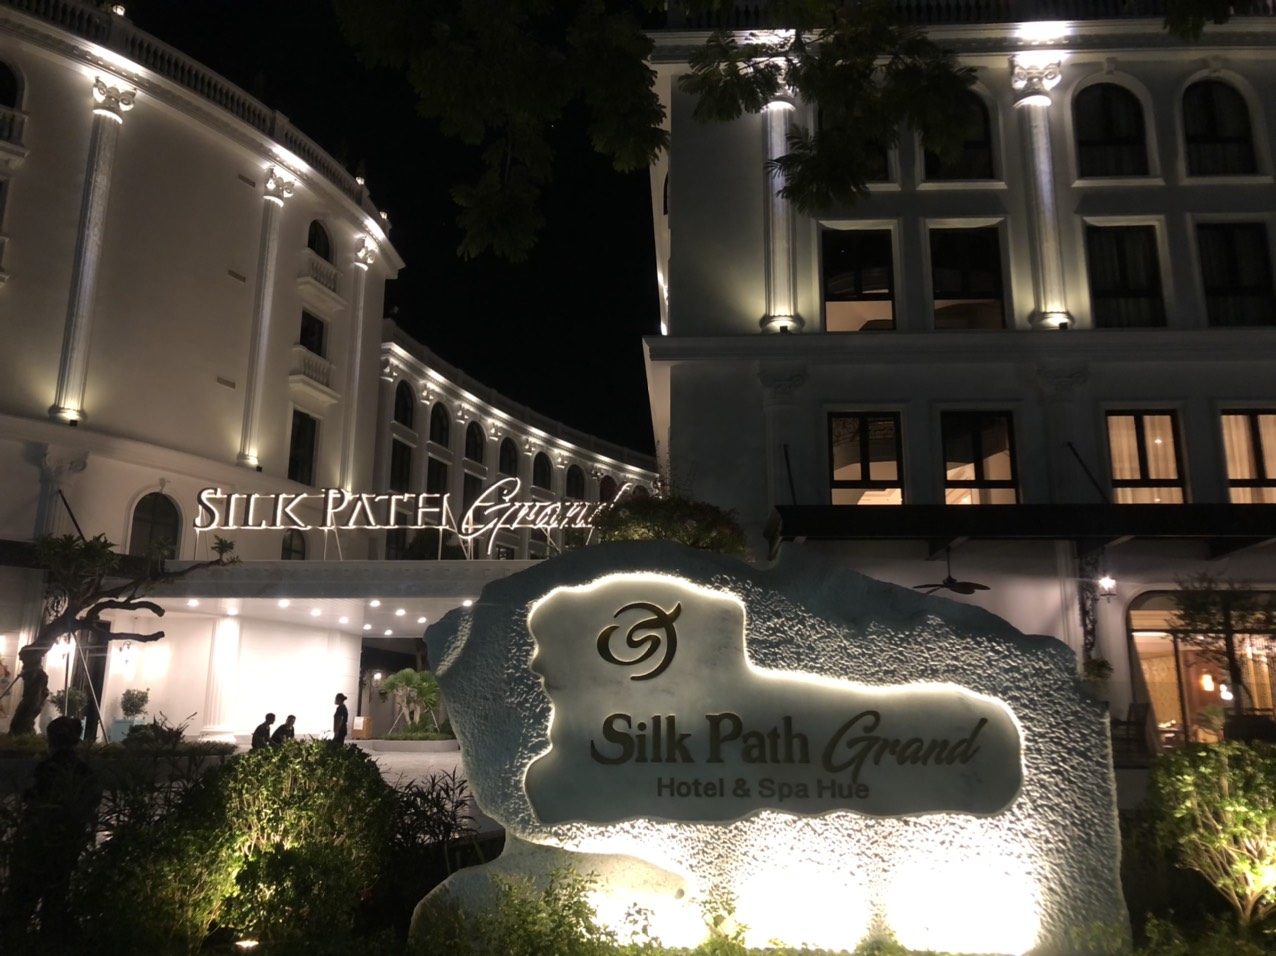 Silk Path Grand Hue Hotel & Spa Equips Luxurious Facilities with Cutting-Edge HARMAN Professional Audio Solution